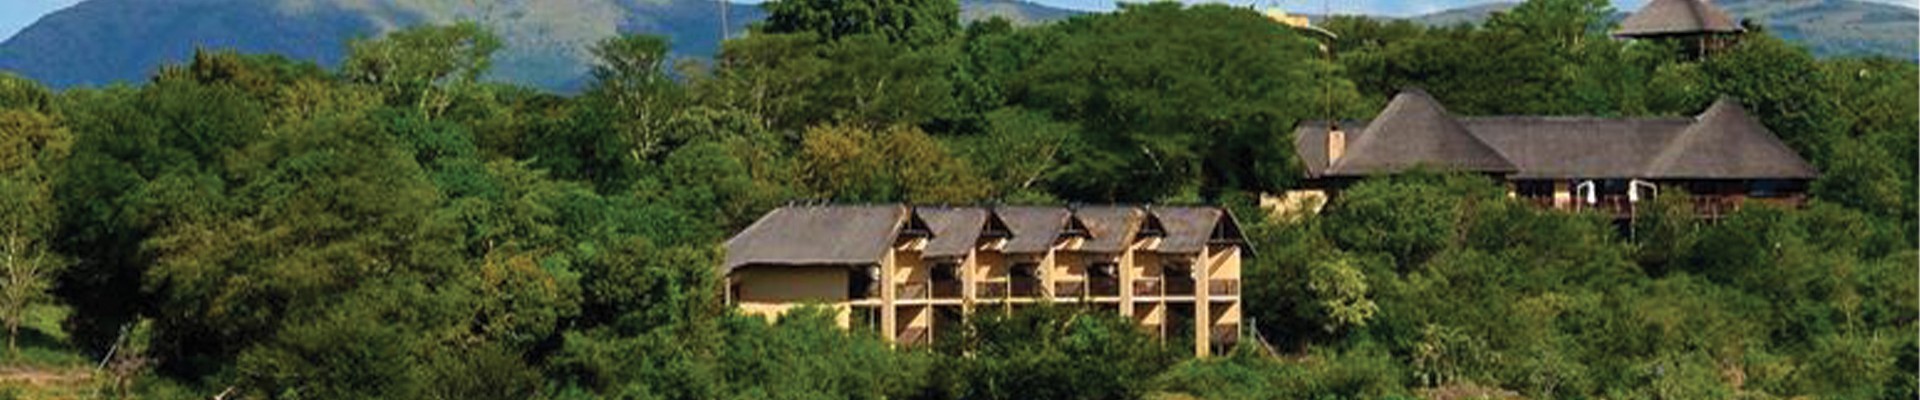 4* Pestana Kruger Lodge - Mpumalanga (2 nights)